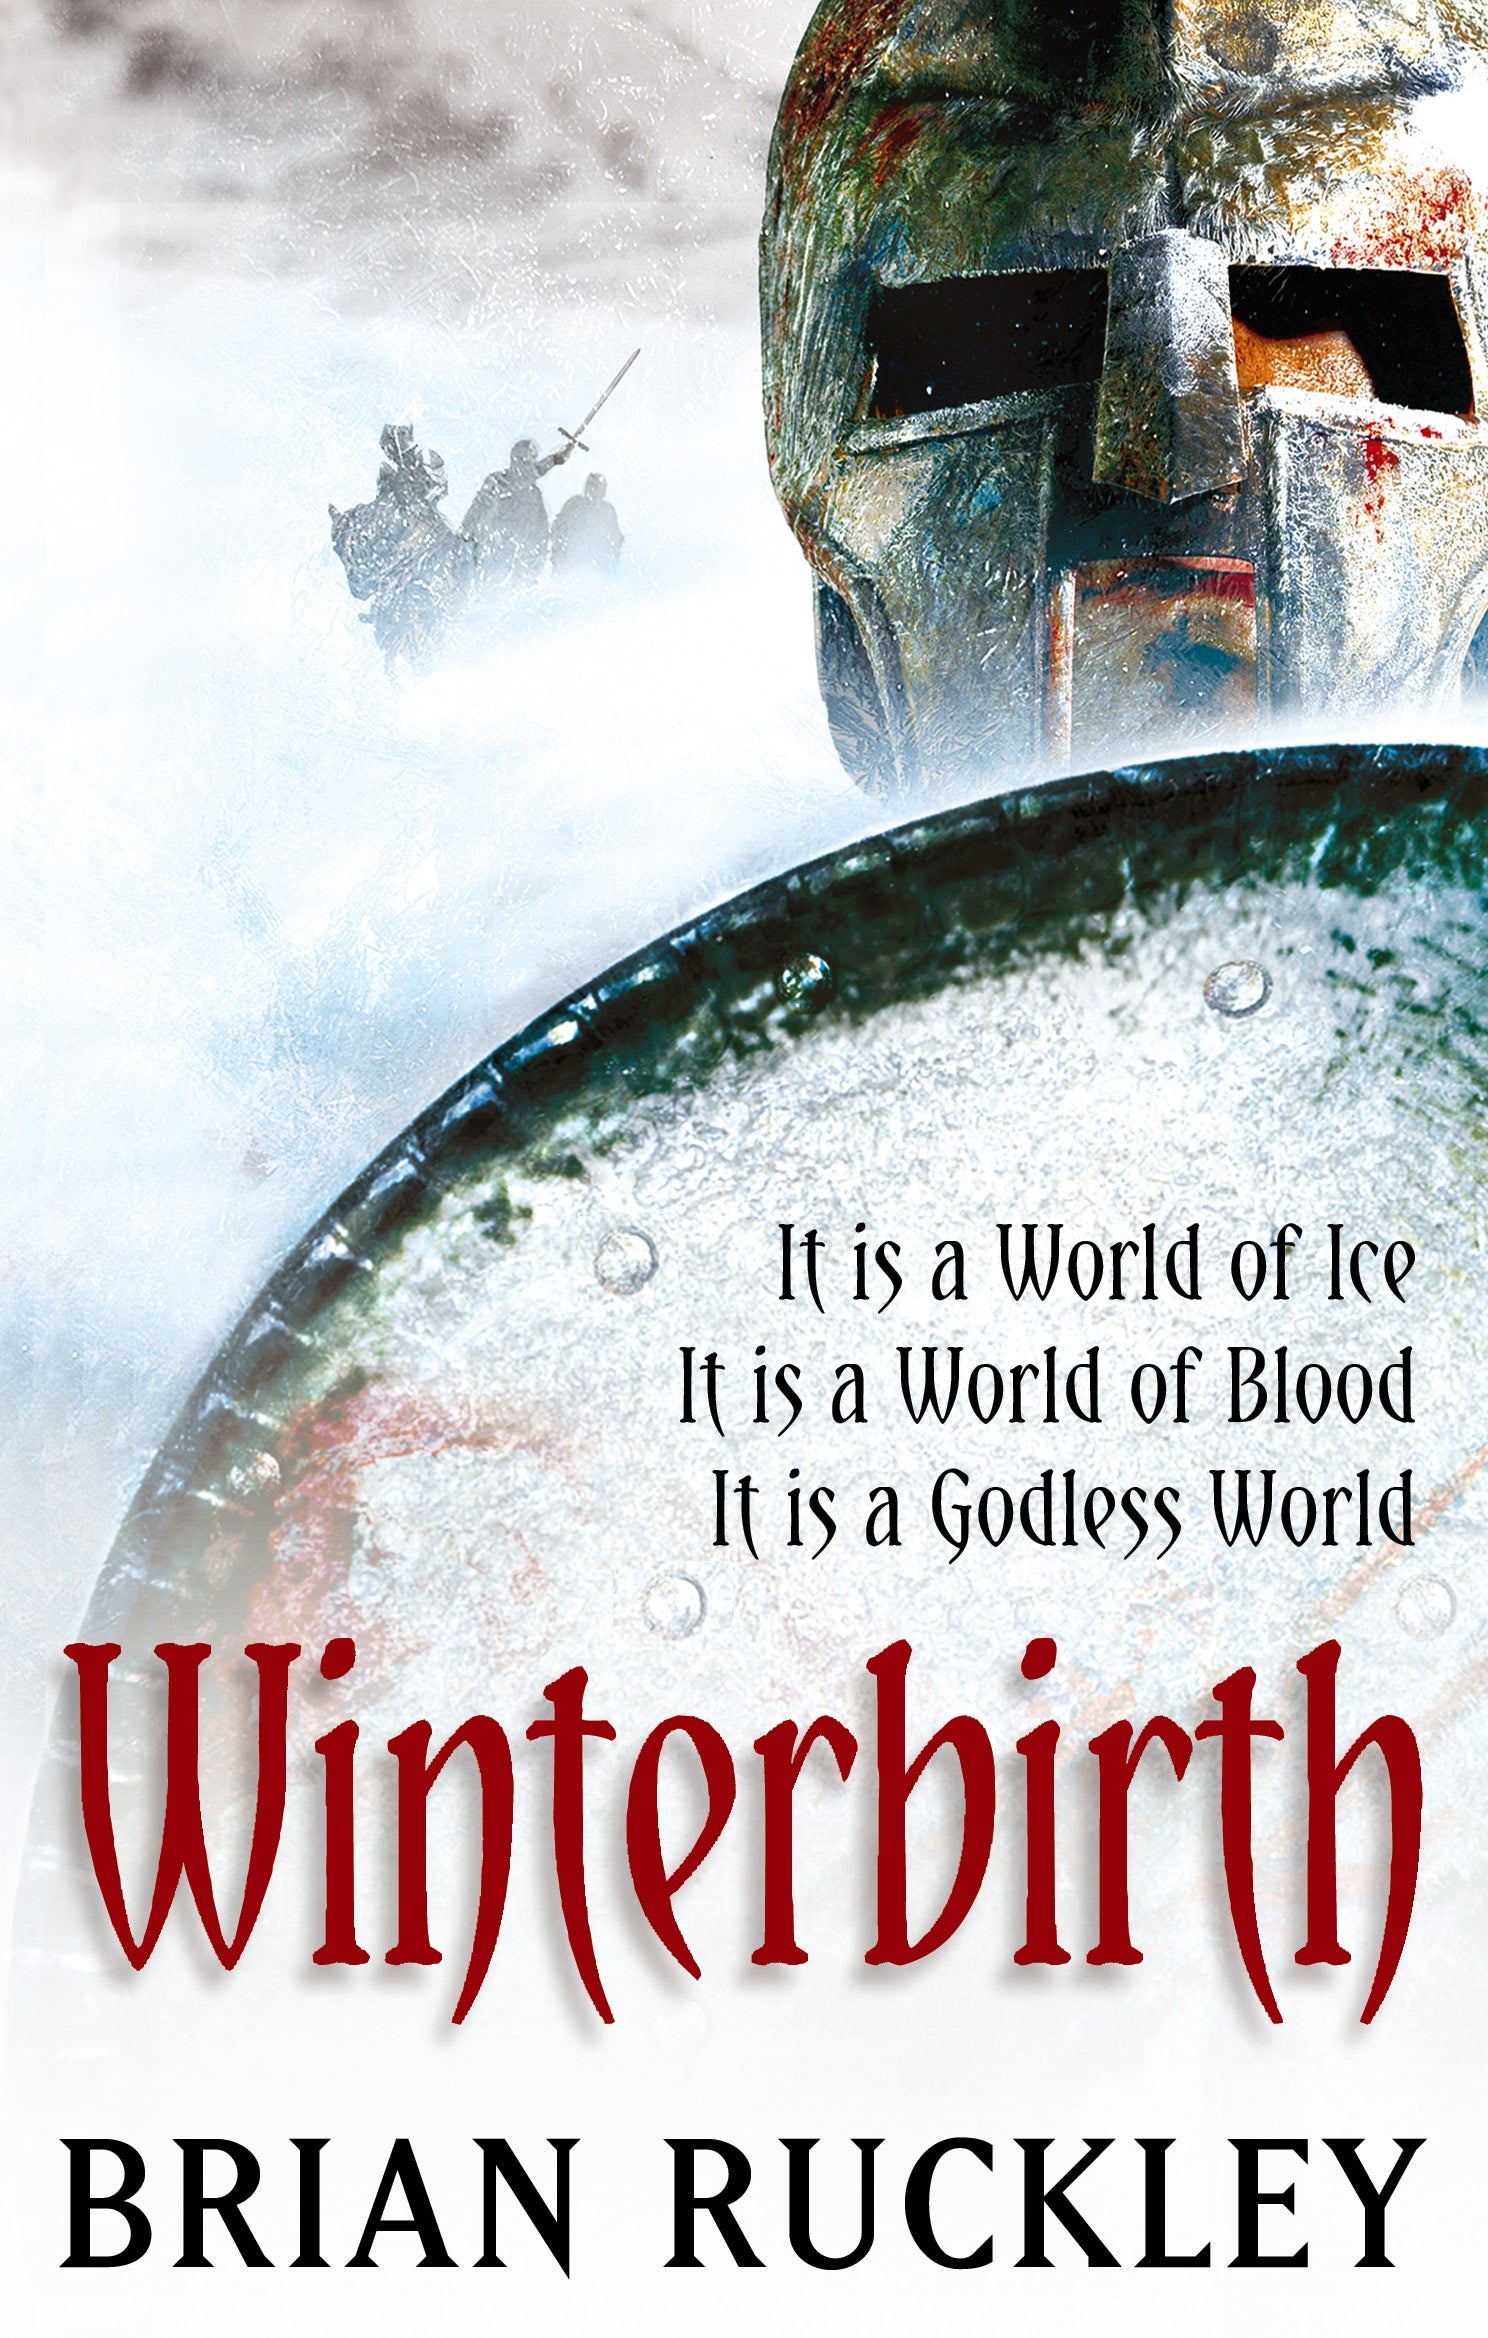 Winterbirth by Brian Ruckley